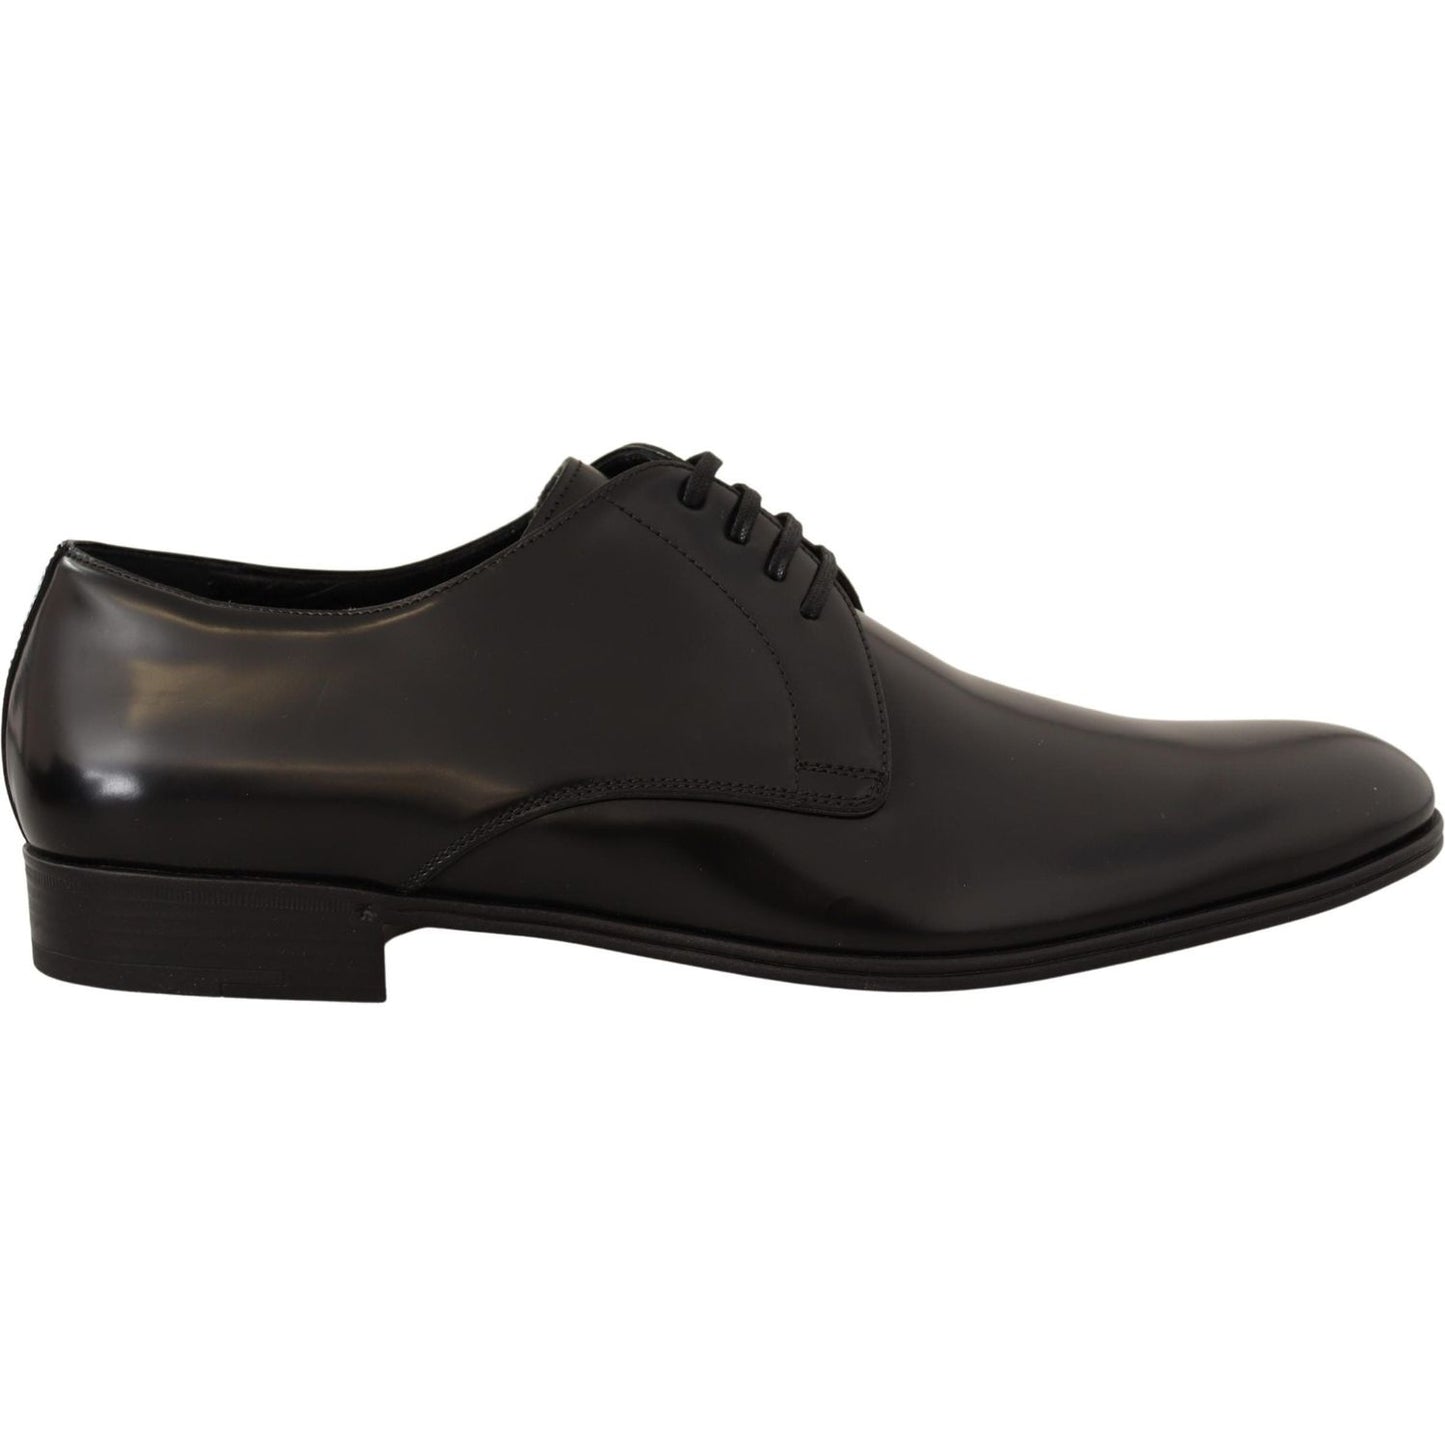 Dolce & Gabbana Elegant Black Leather Derby Shoes black-leather-lace-up-men-dress-derby-shoes-2 Dress Shoes IMG_3704-scaled-5acbf34b-45a.jpg